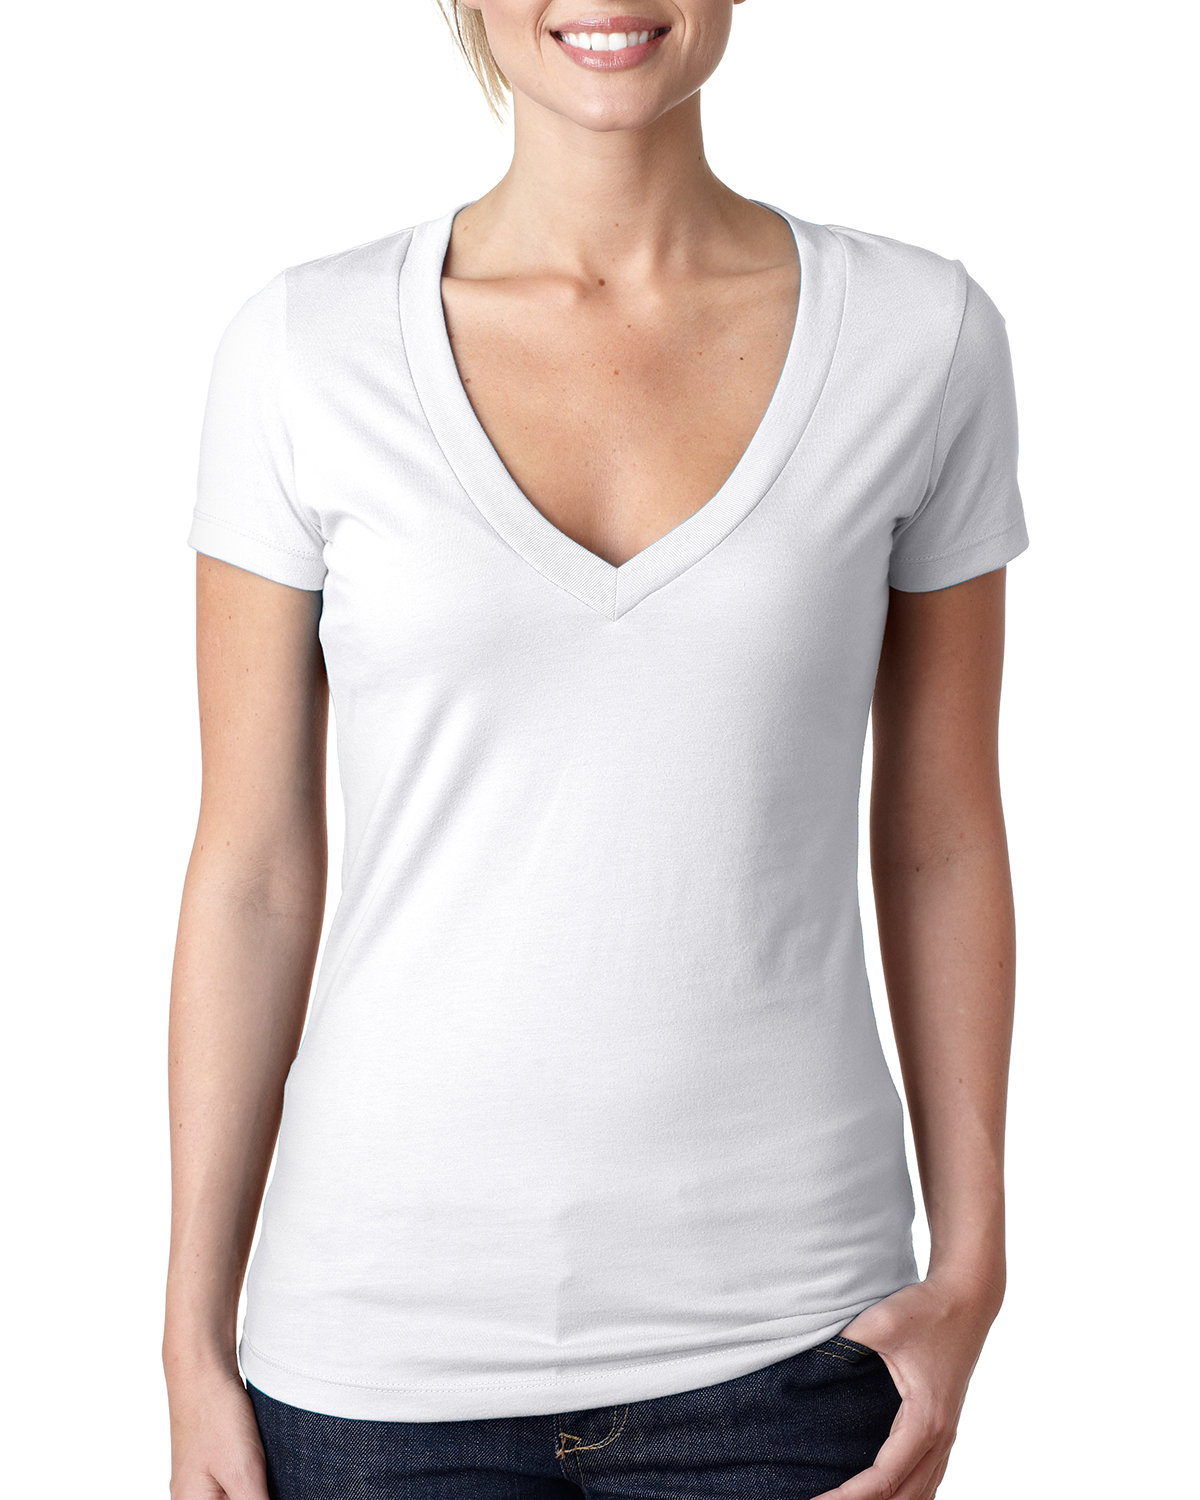 Next Level Apparel Ladies' CVC Deep V-Neck T-Shirt WHITE 